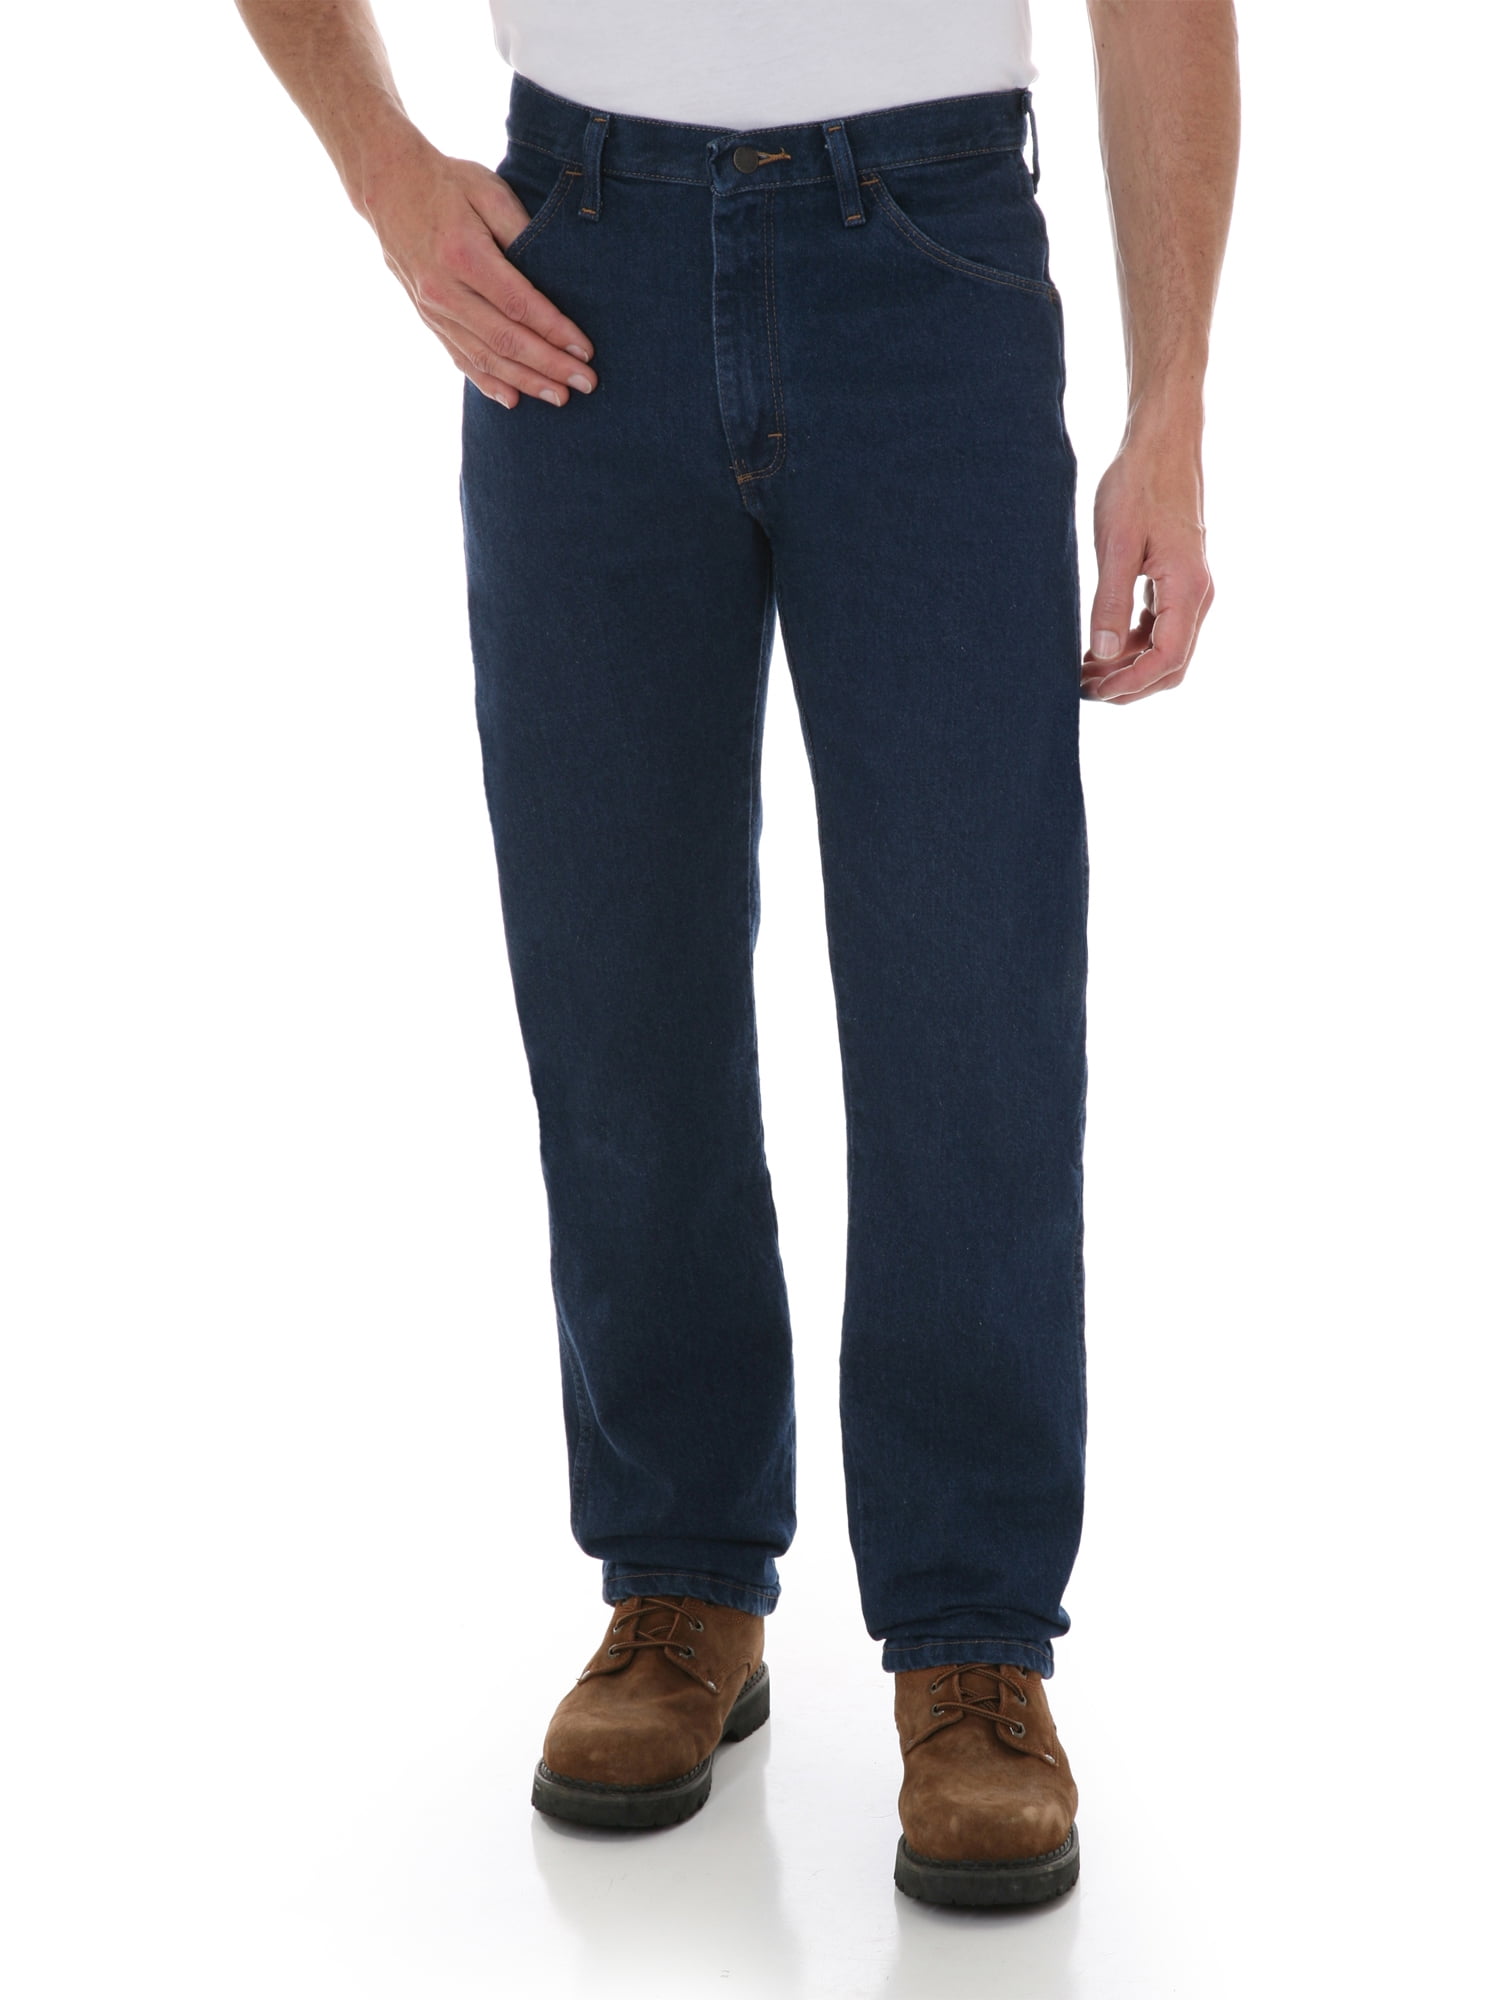 Tall Men's Regular Fit Straight-Leg Jeans - Walmart.com